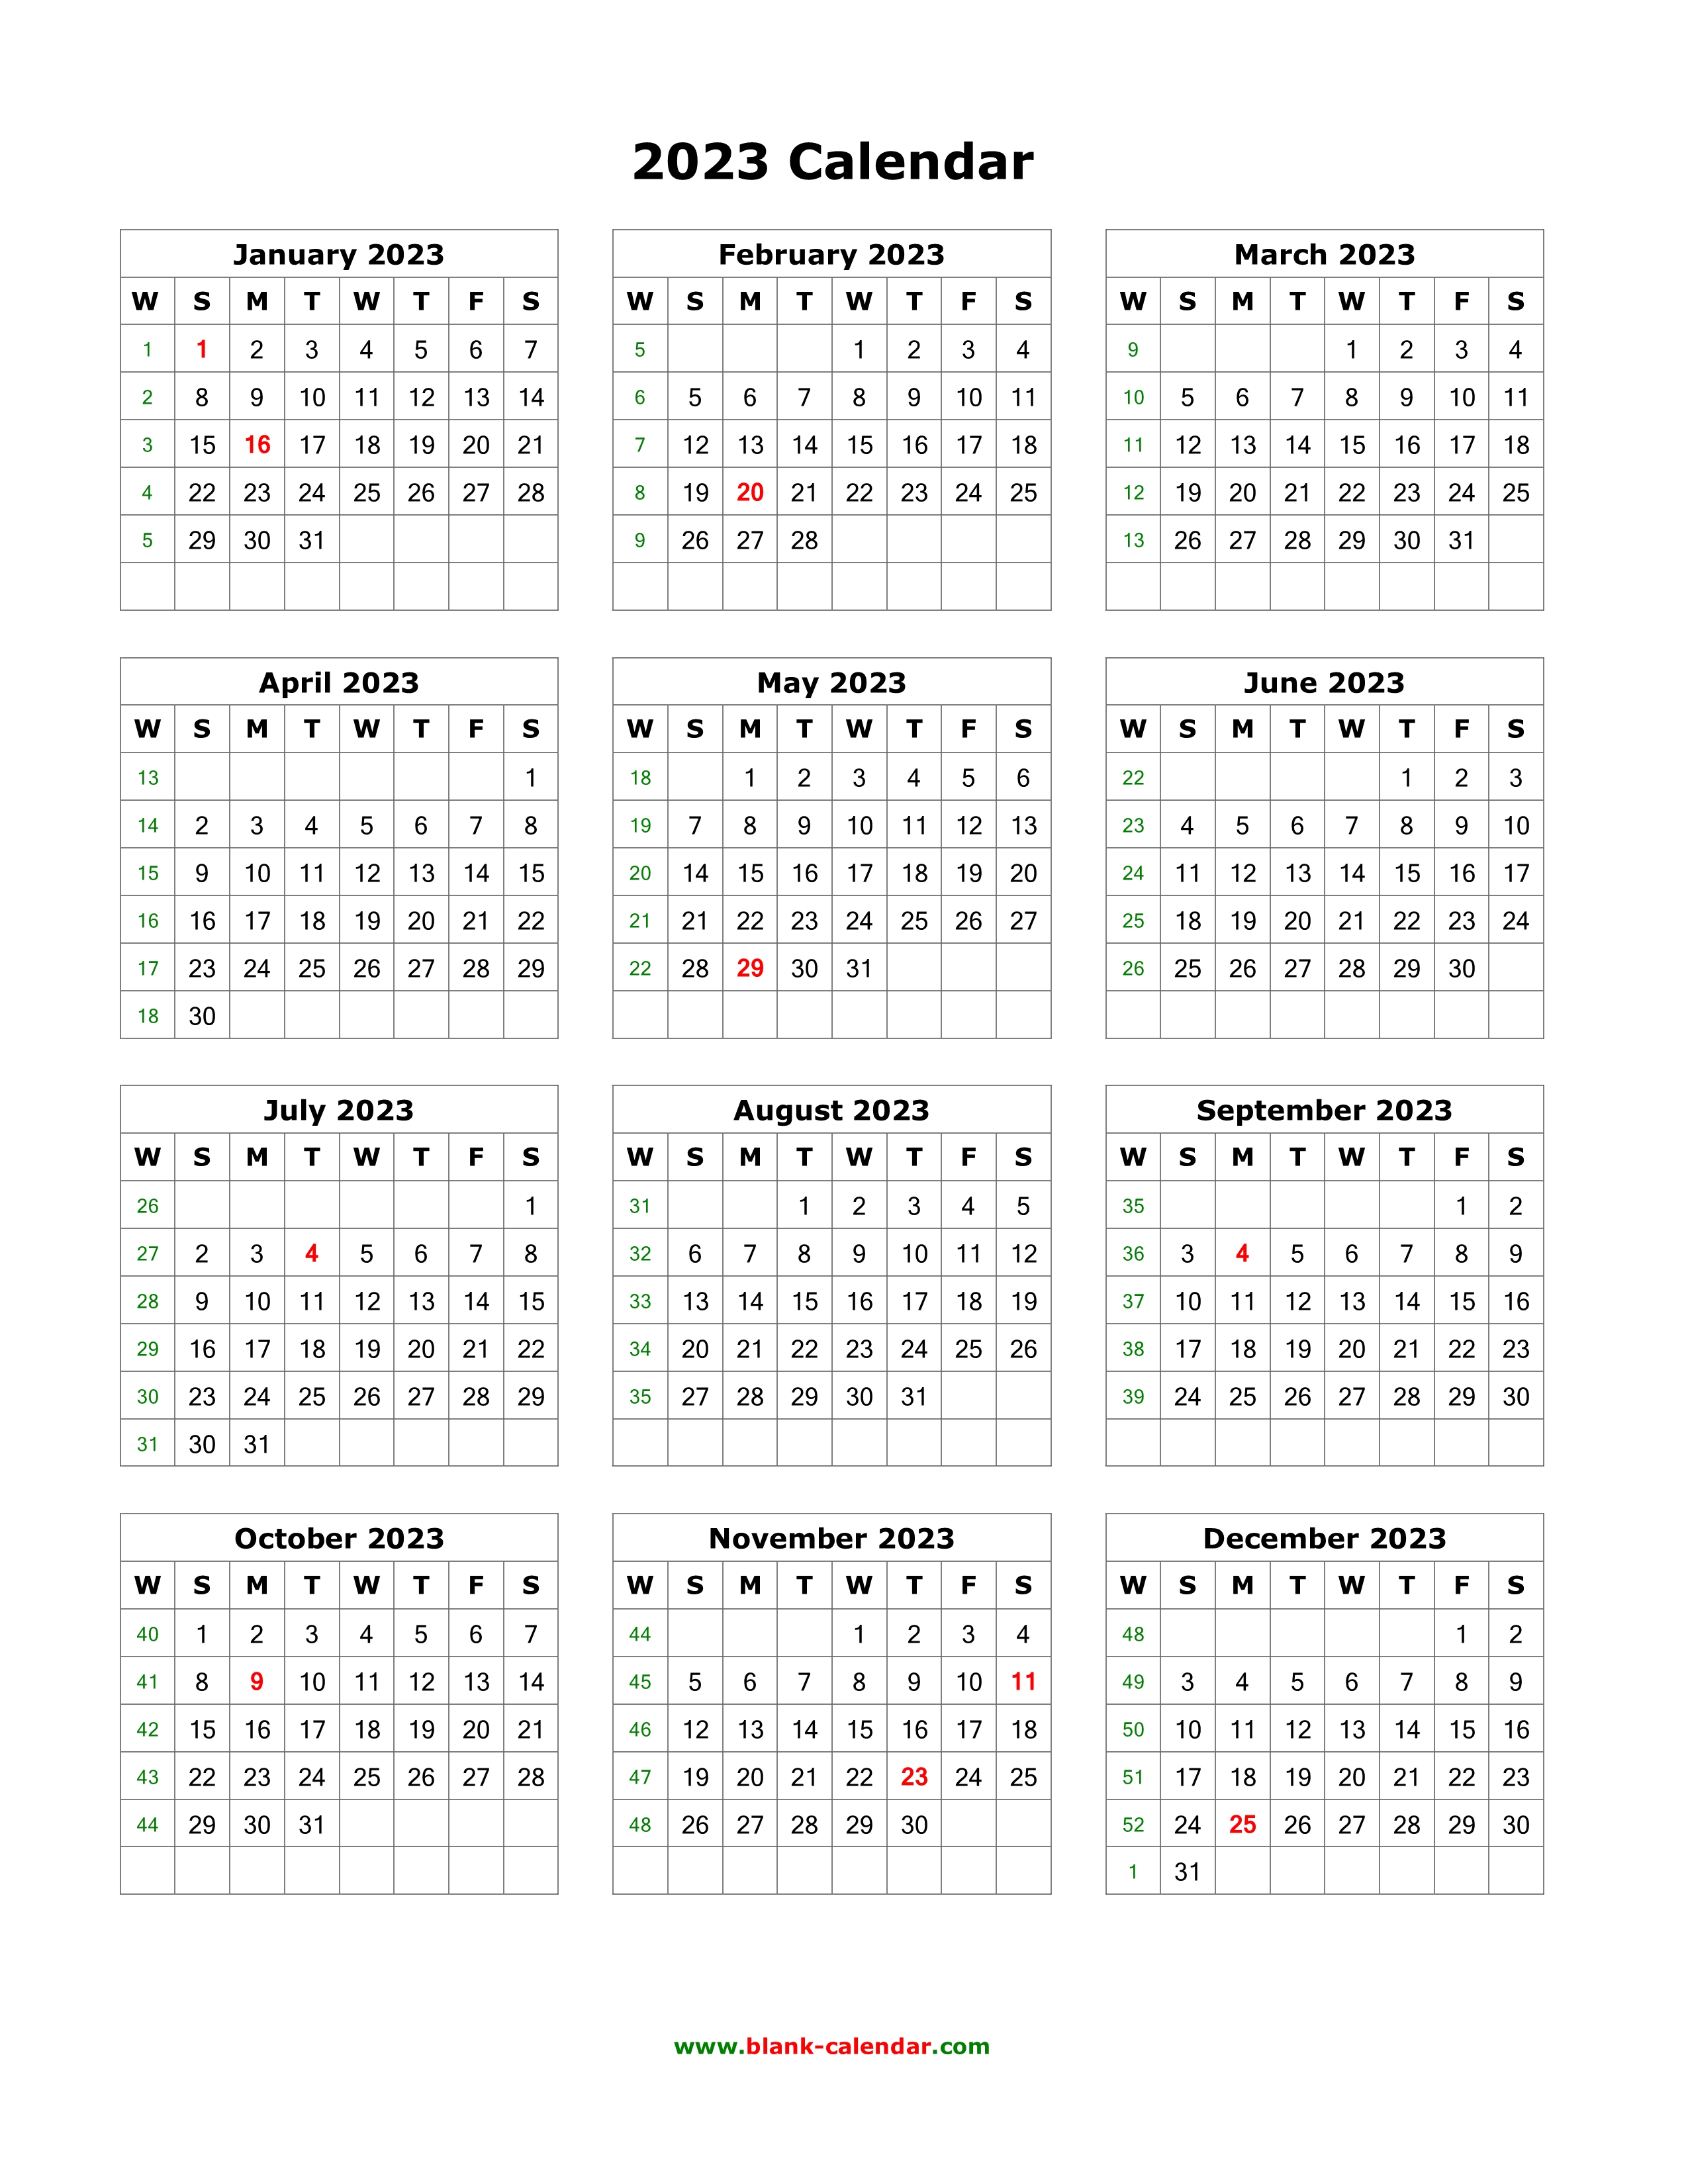 Watch blank Calendar 2023 Photos